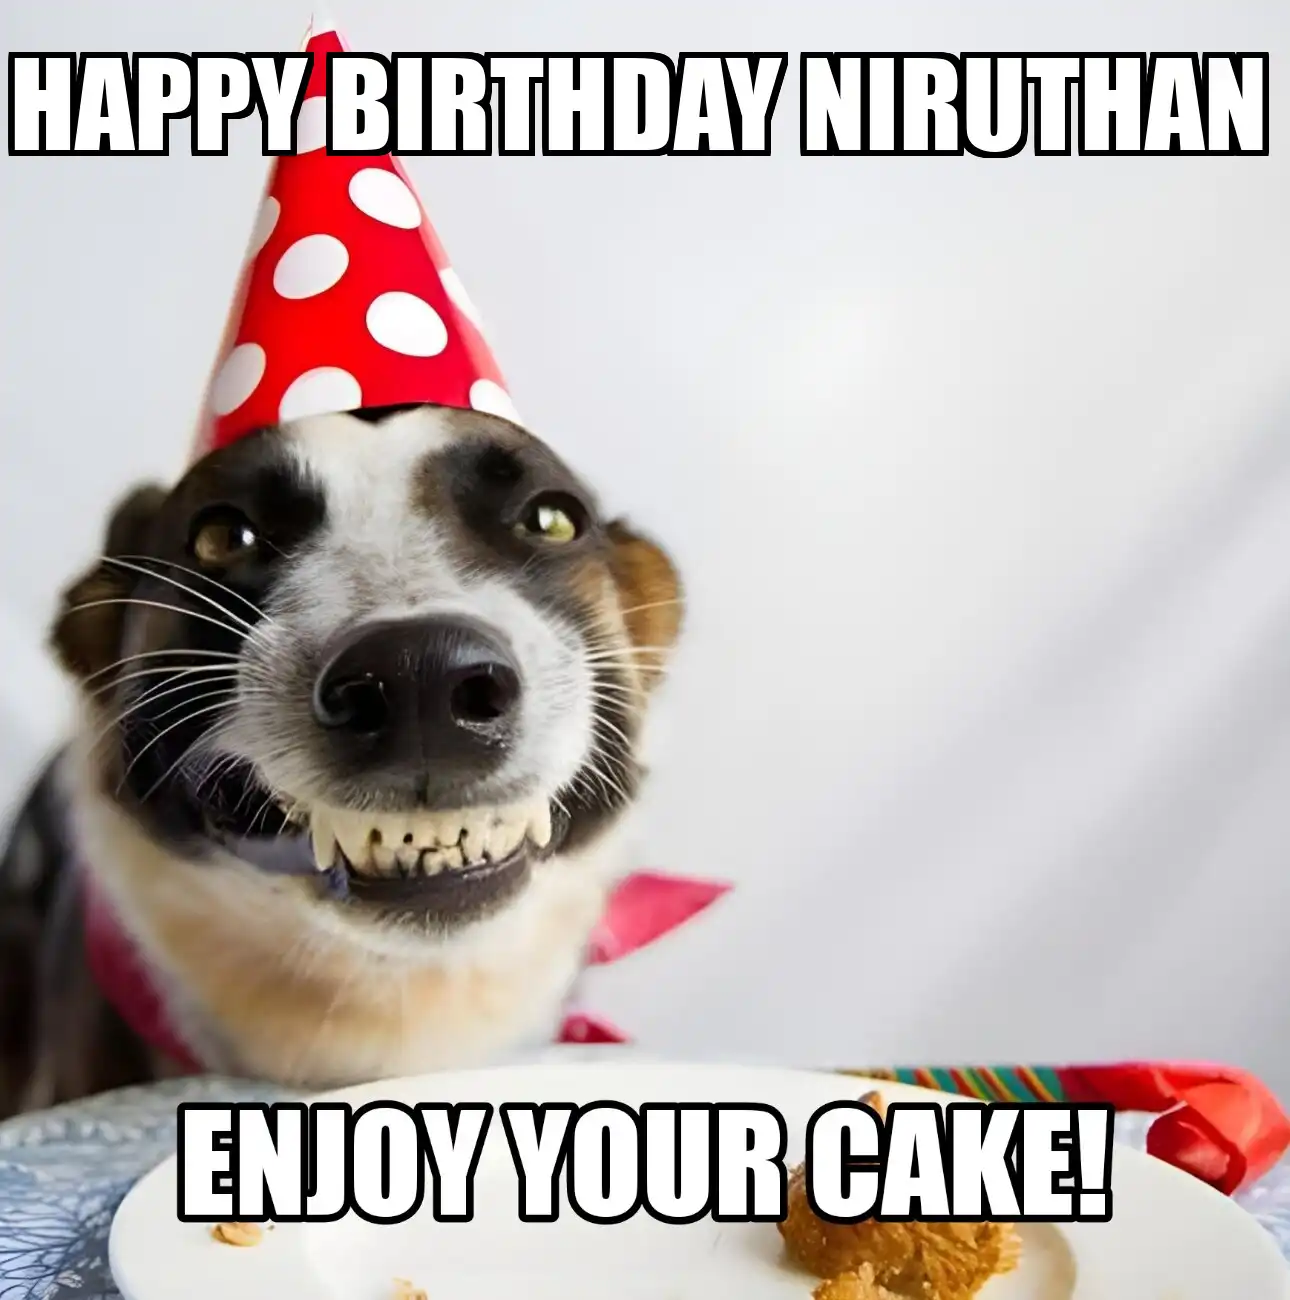 Happy Birthday Niruthan Enjoy Your Cake Dog Meme